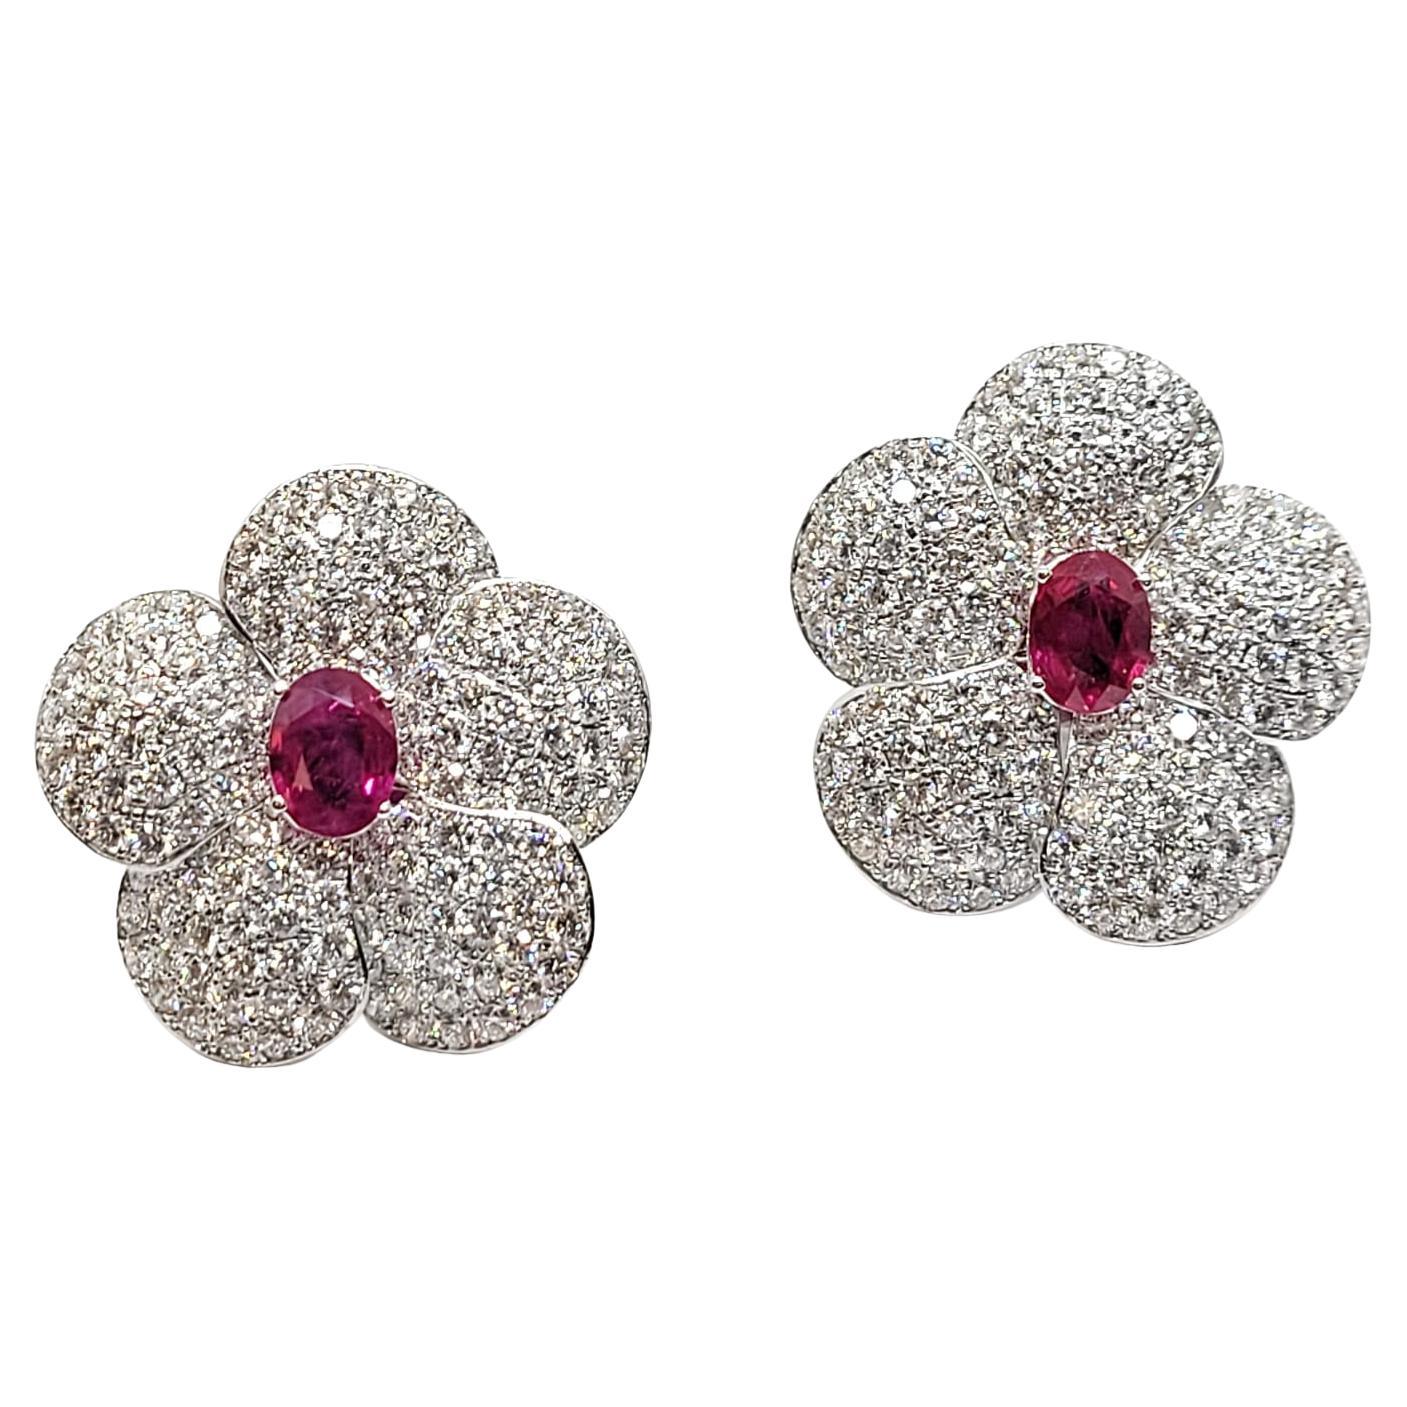 Andreoli 2.32 Carat Ruby Diamond 18k White Gold Flower Earrings CDC Certified